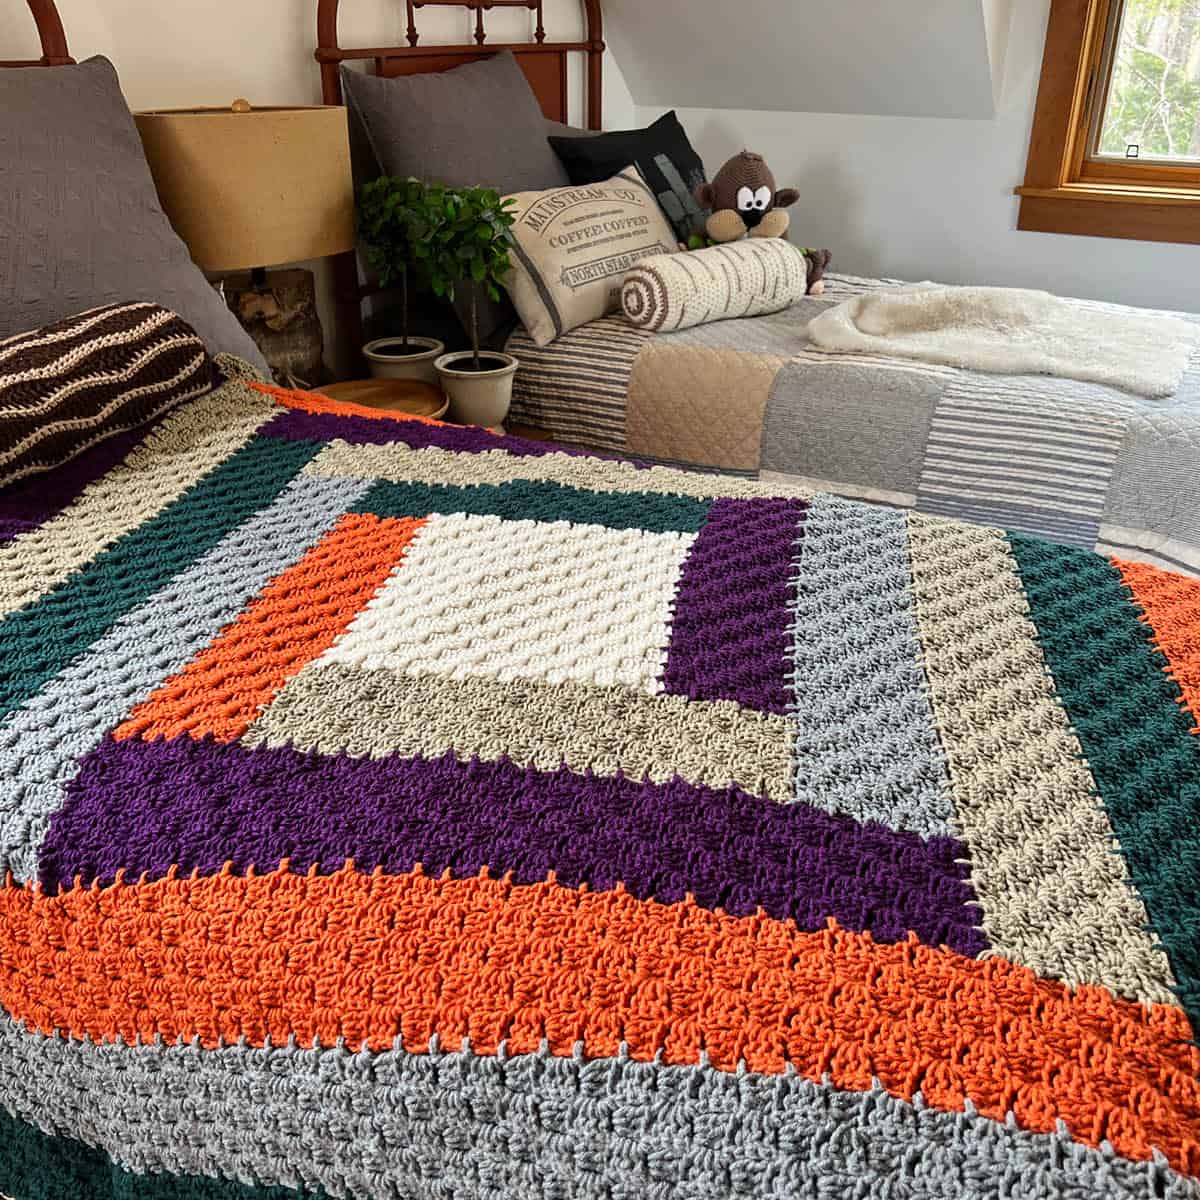 Crochet Corner to Corner Log Cabin Pattern on Bed